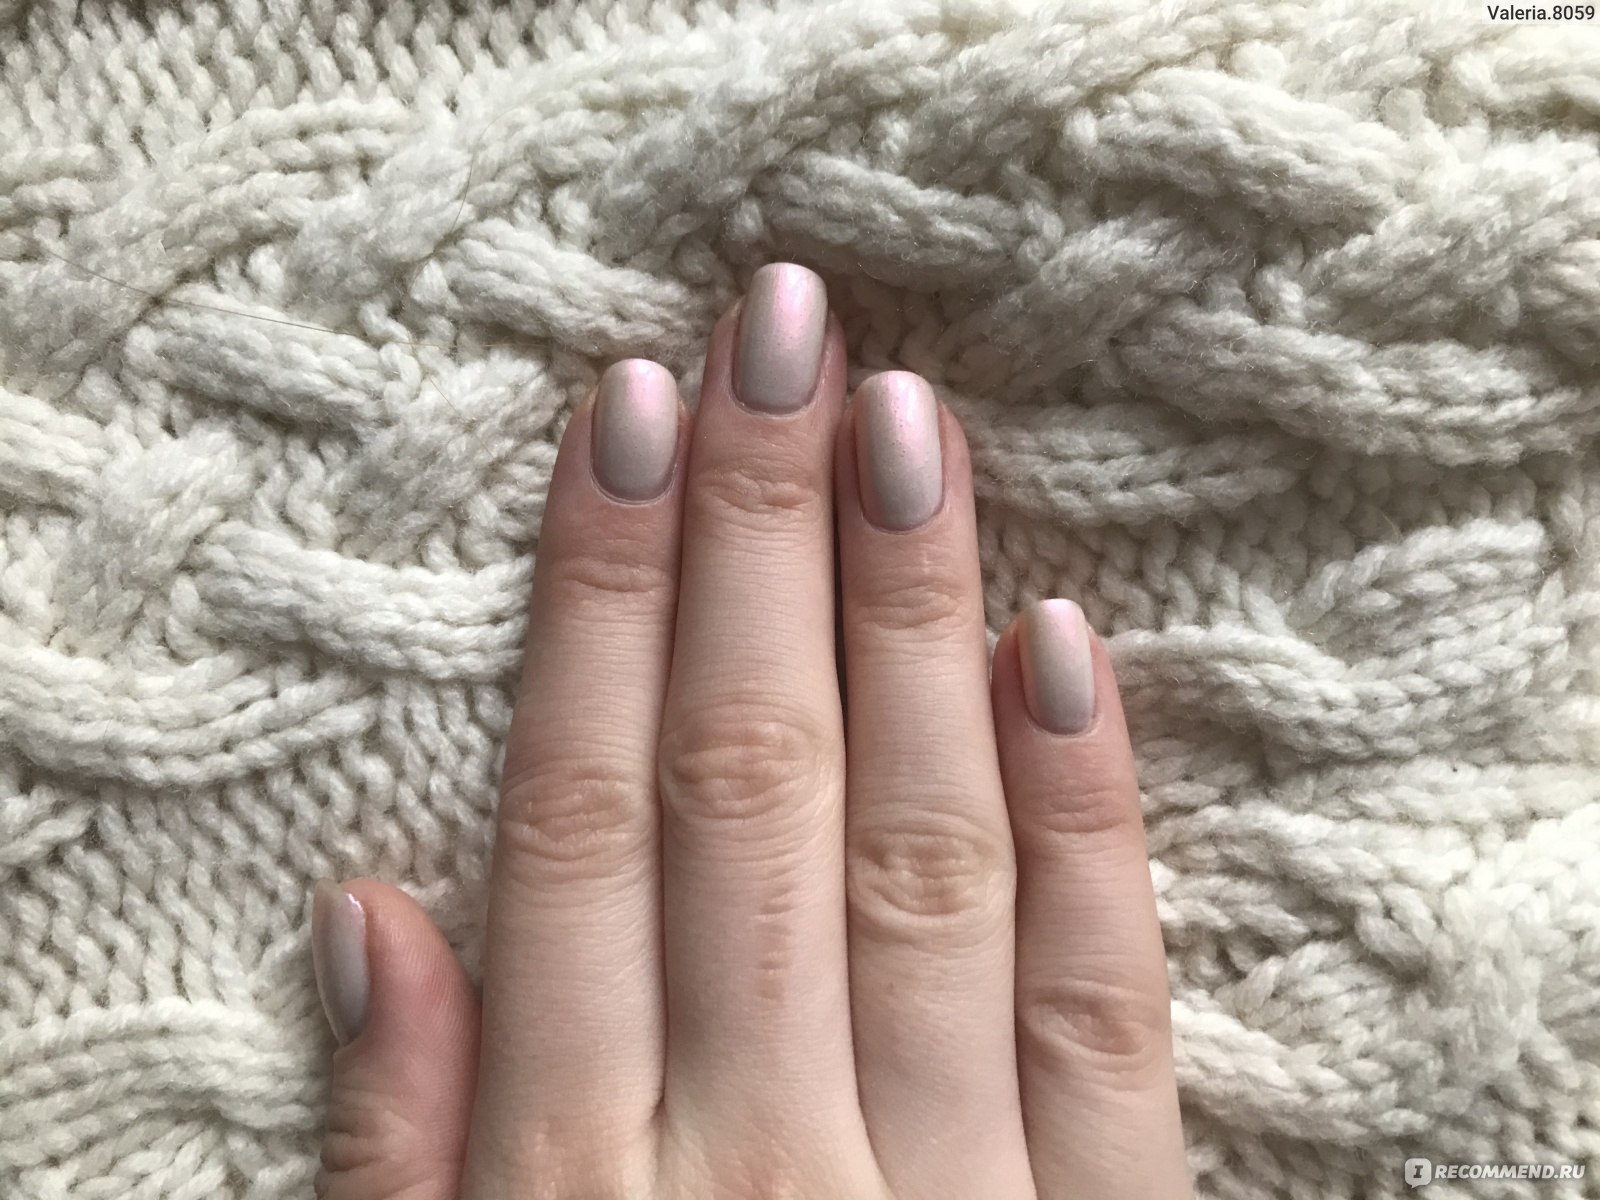 Лак для ногтей jeanmishel Gel Formula nail polish фото